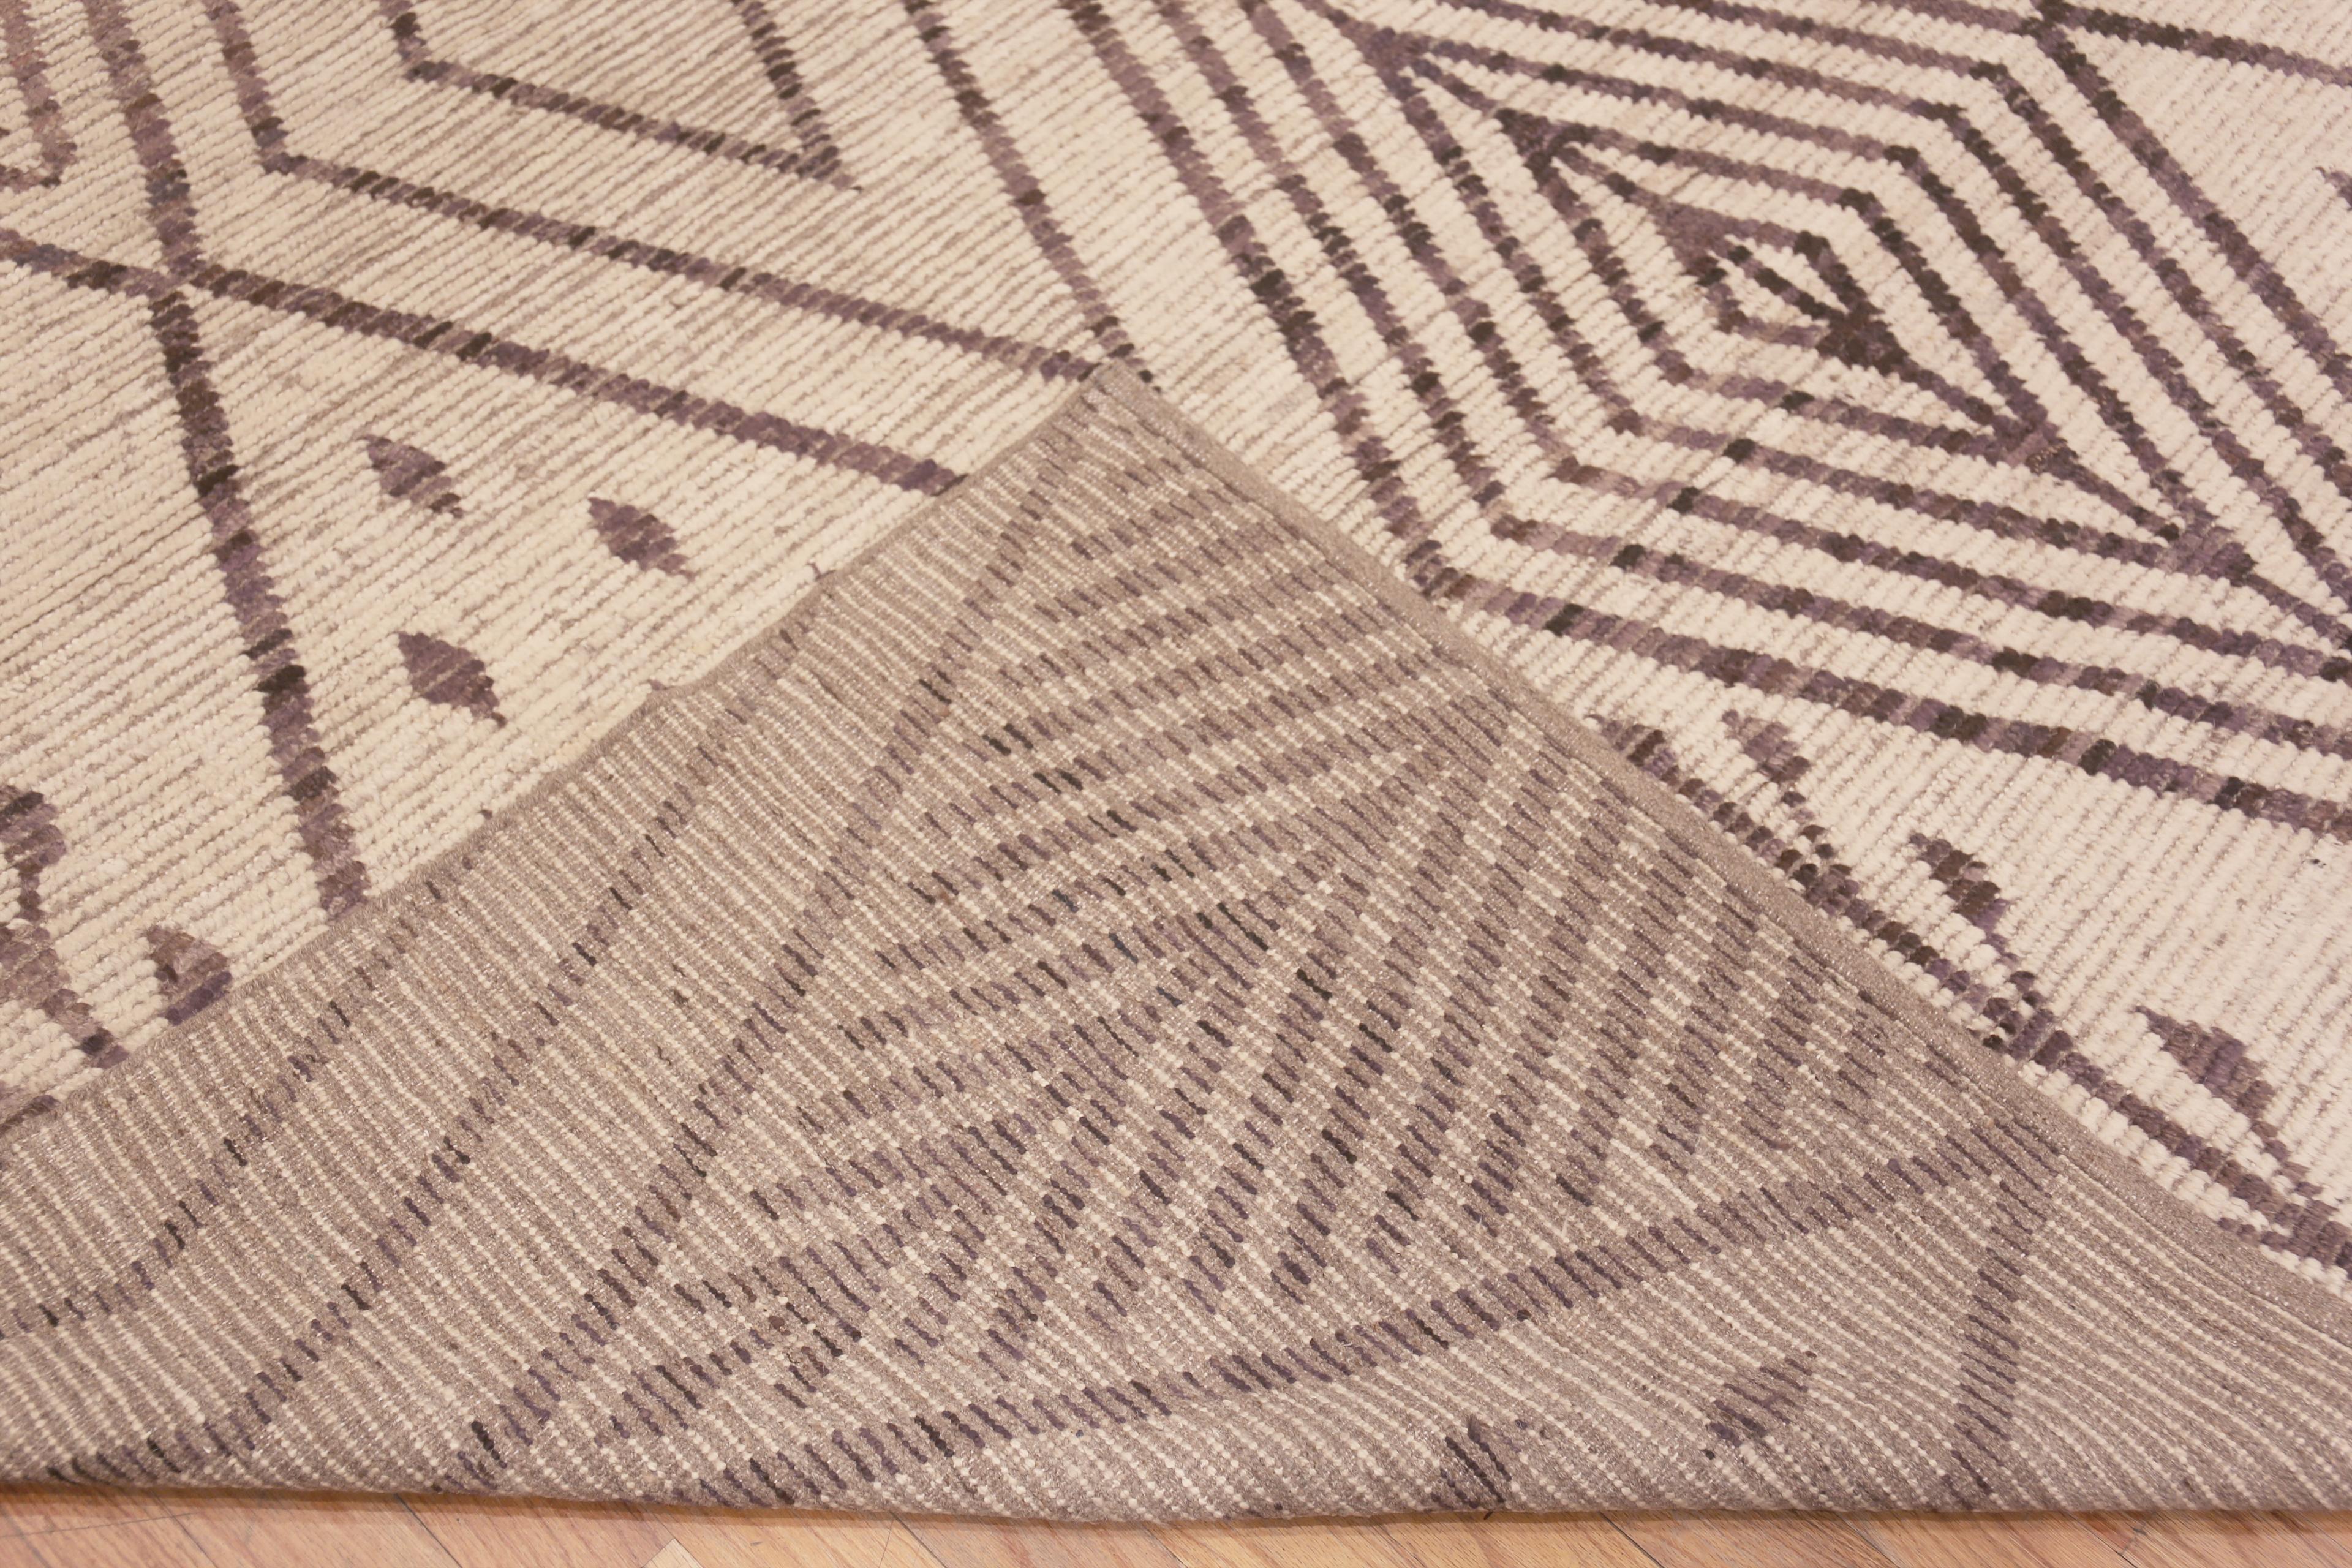 Nazmiyal Collection Tribal Geometric Beni Ourain Design Modern Rug 12' x 15'3